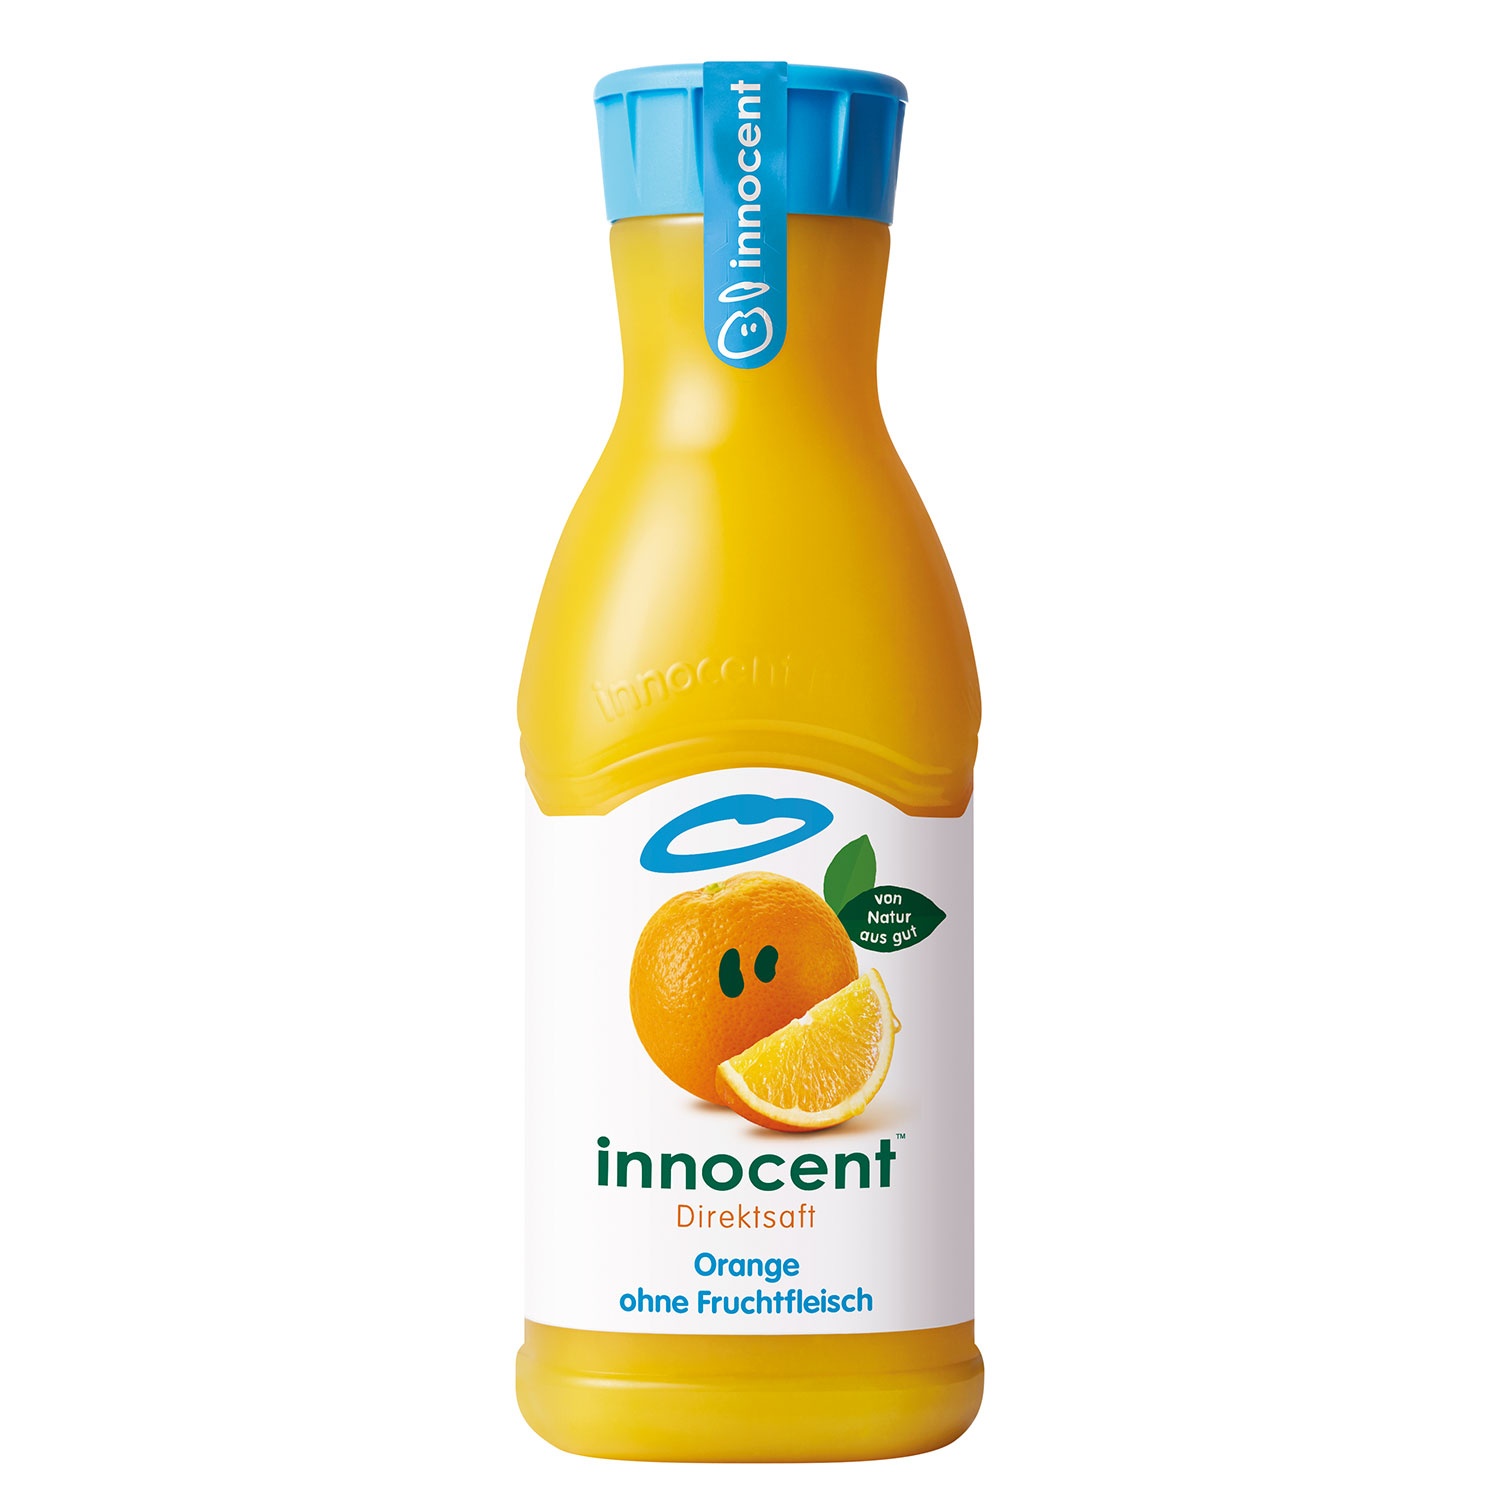 INNOCENT Direktsaft Orange 900 ml